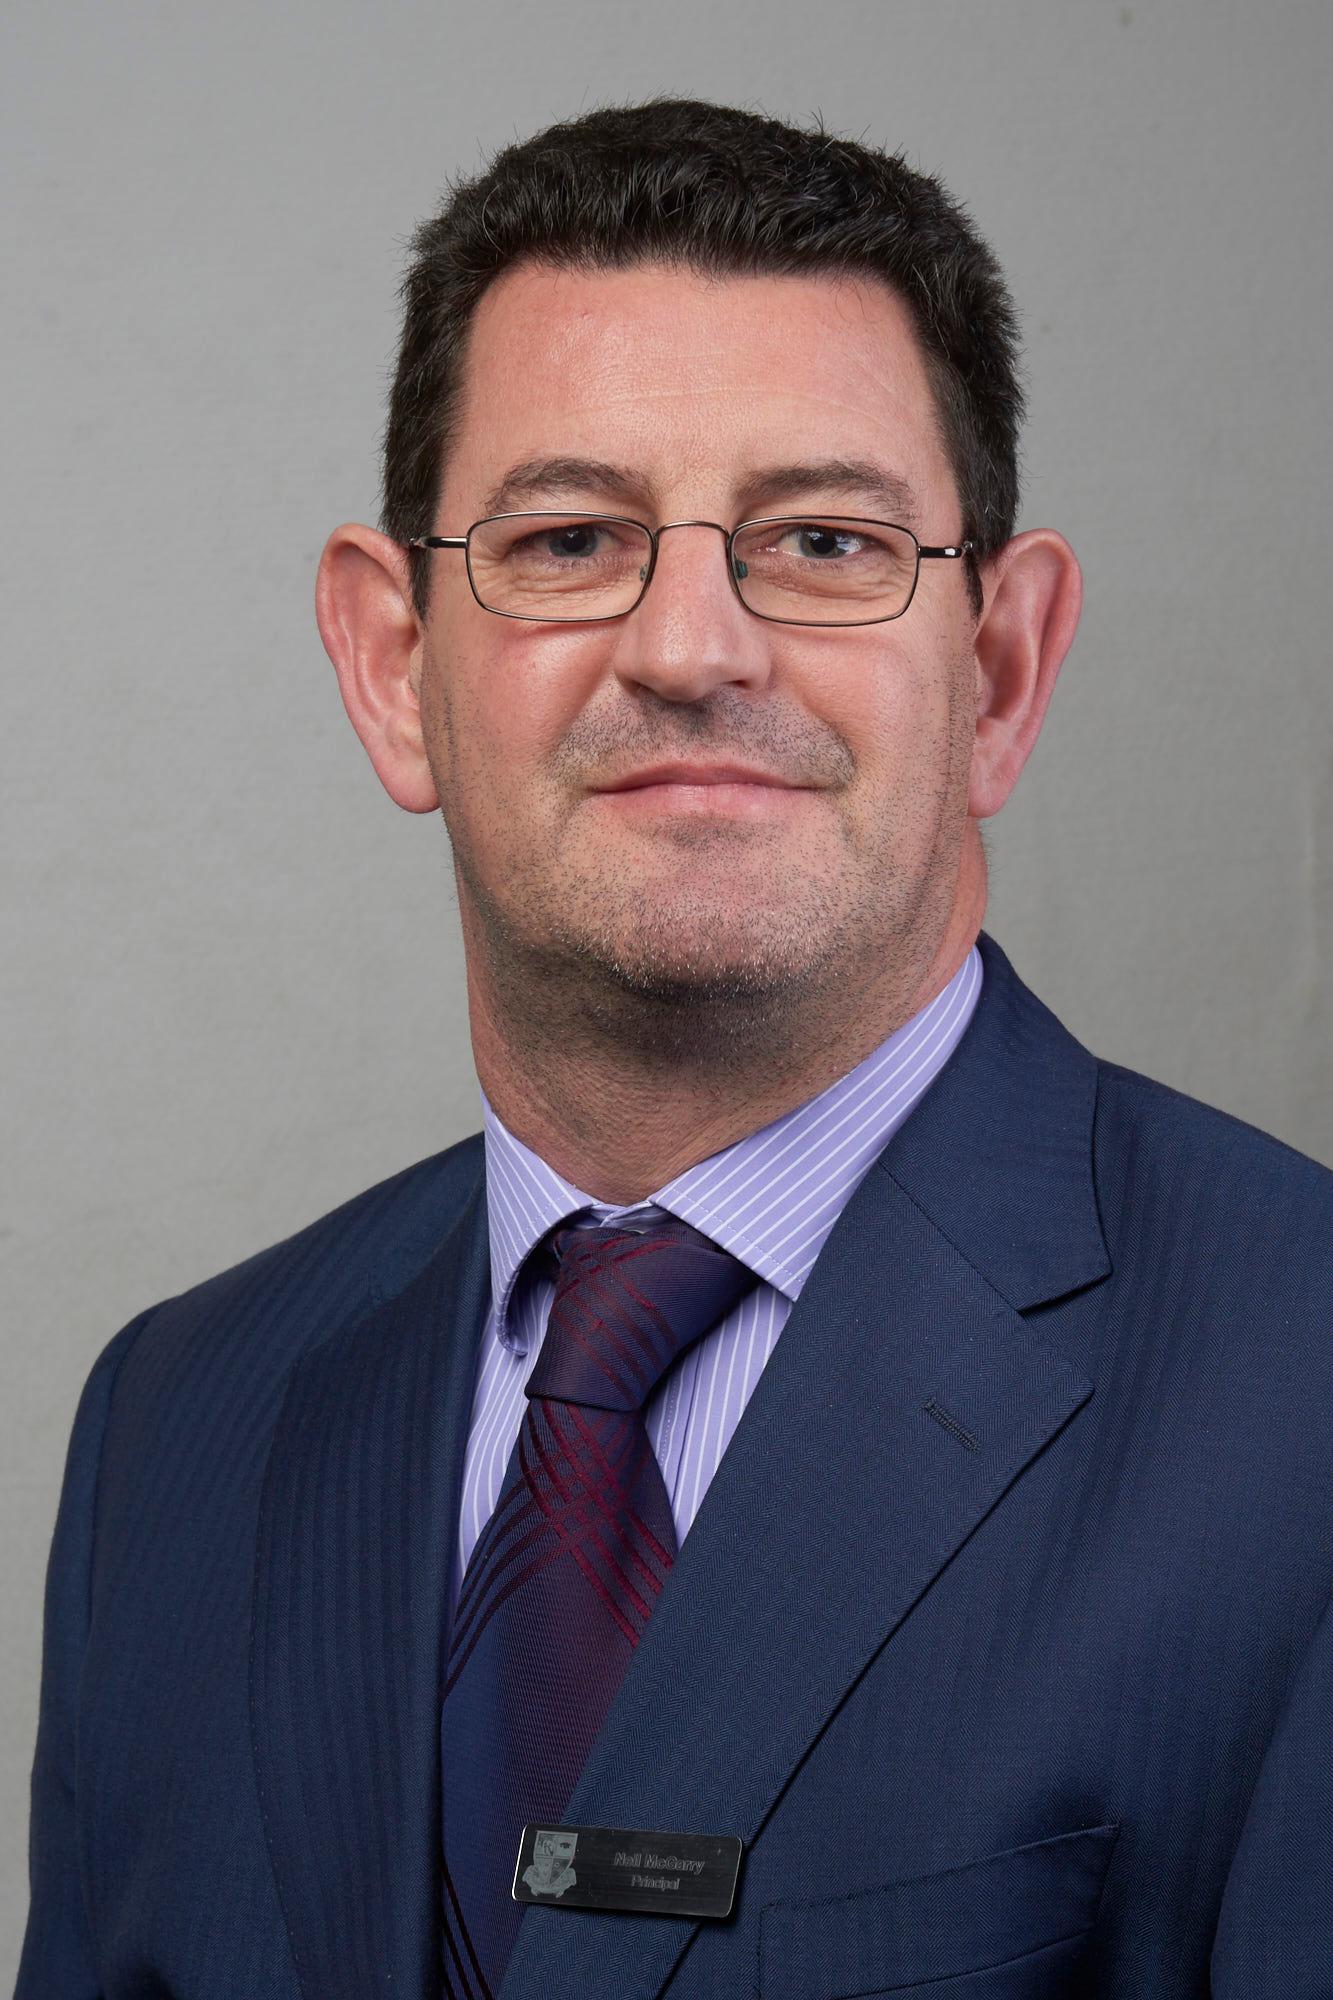 Mr Neil McGarry, Principal of Britannica International School